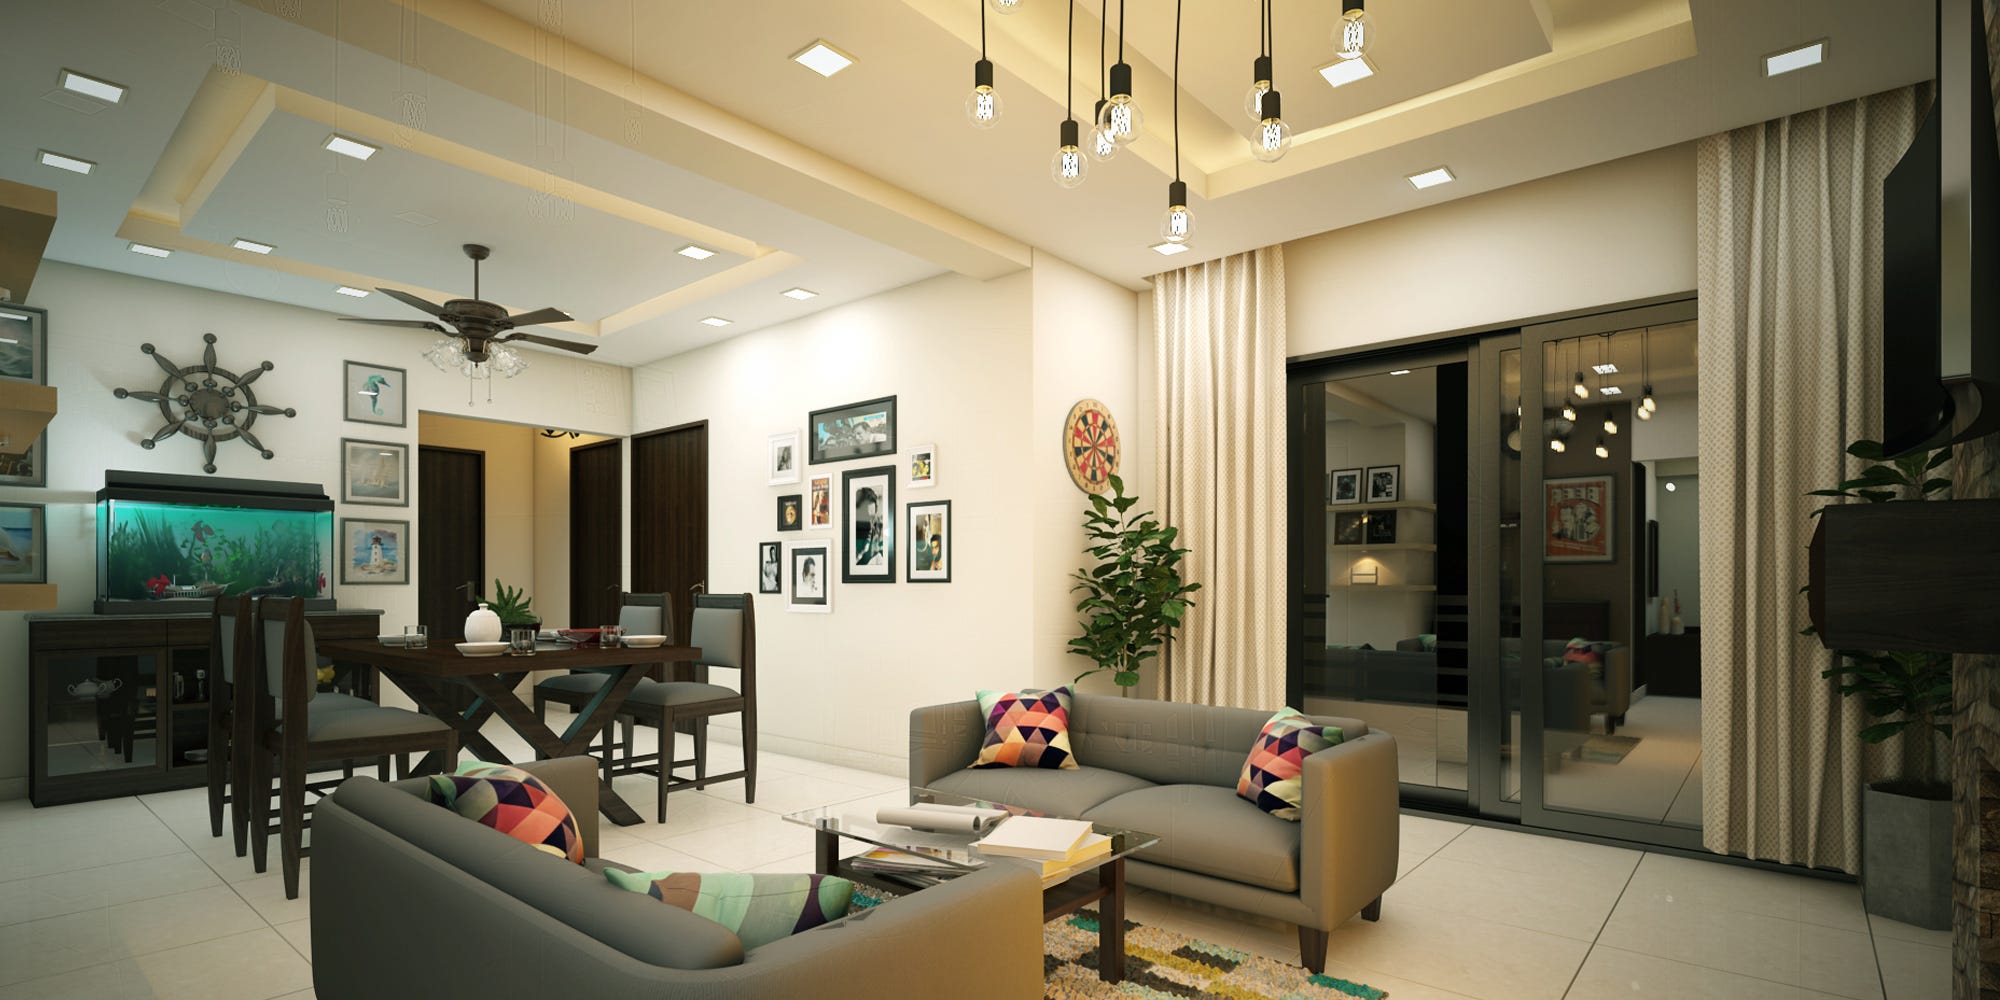 Kerala Home Interior Ideas To Make A Small Room Look Bigger